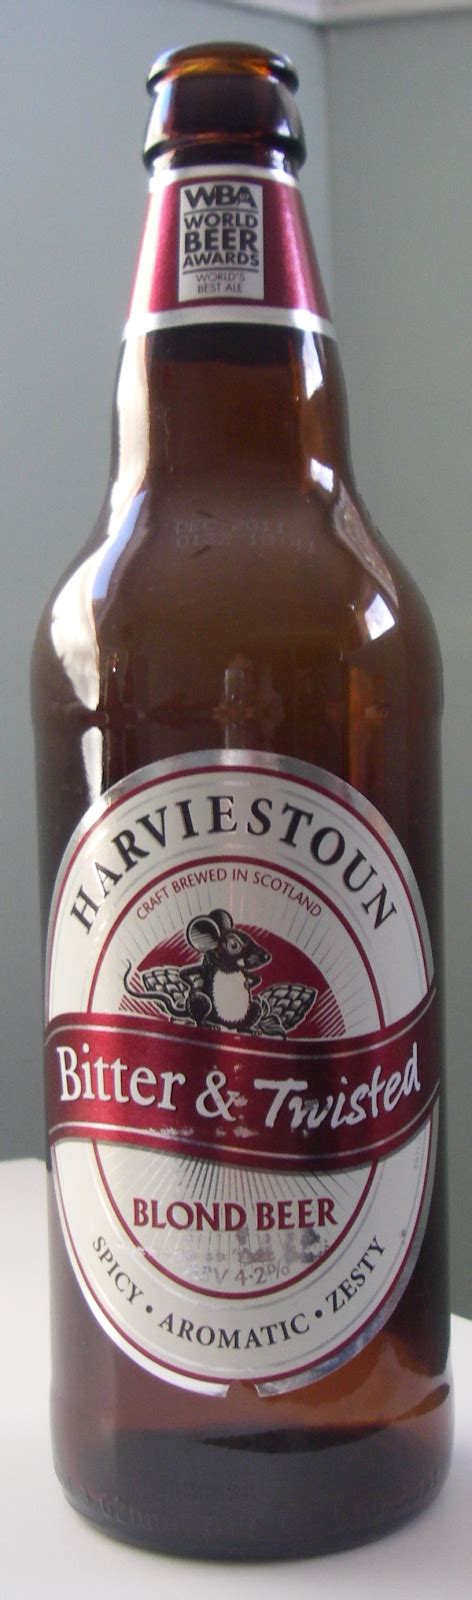 Beer Maven Harviestoun Bitter And Twisted Blond Beer Scotland